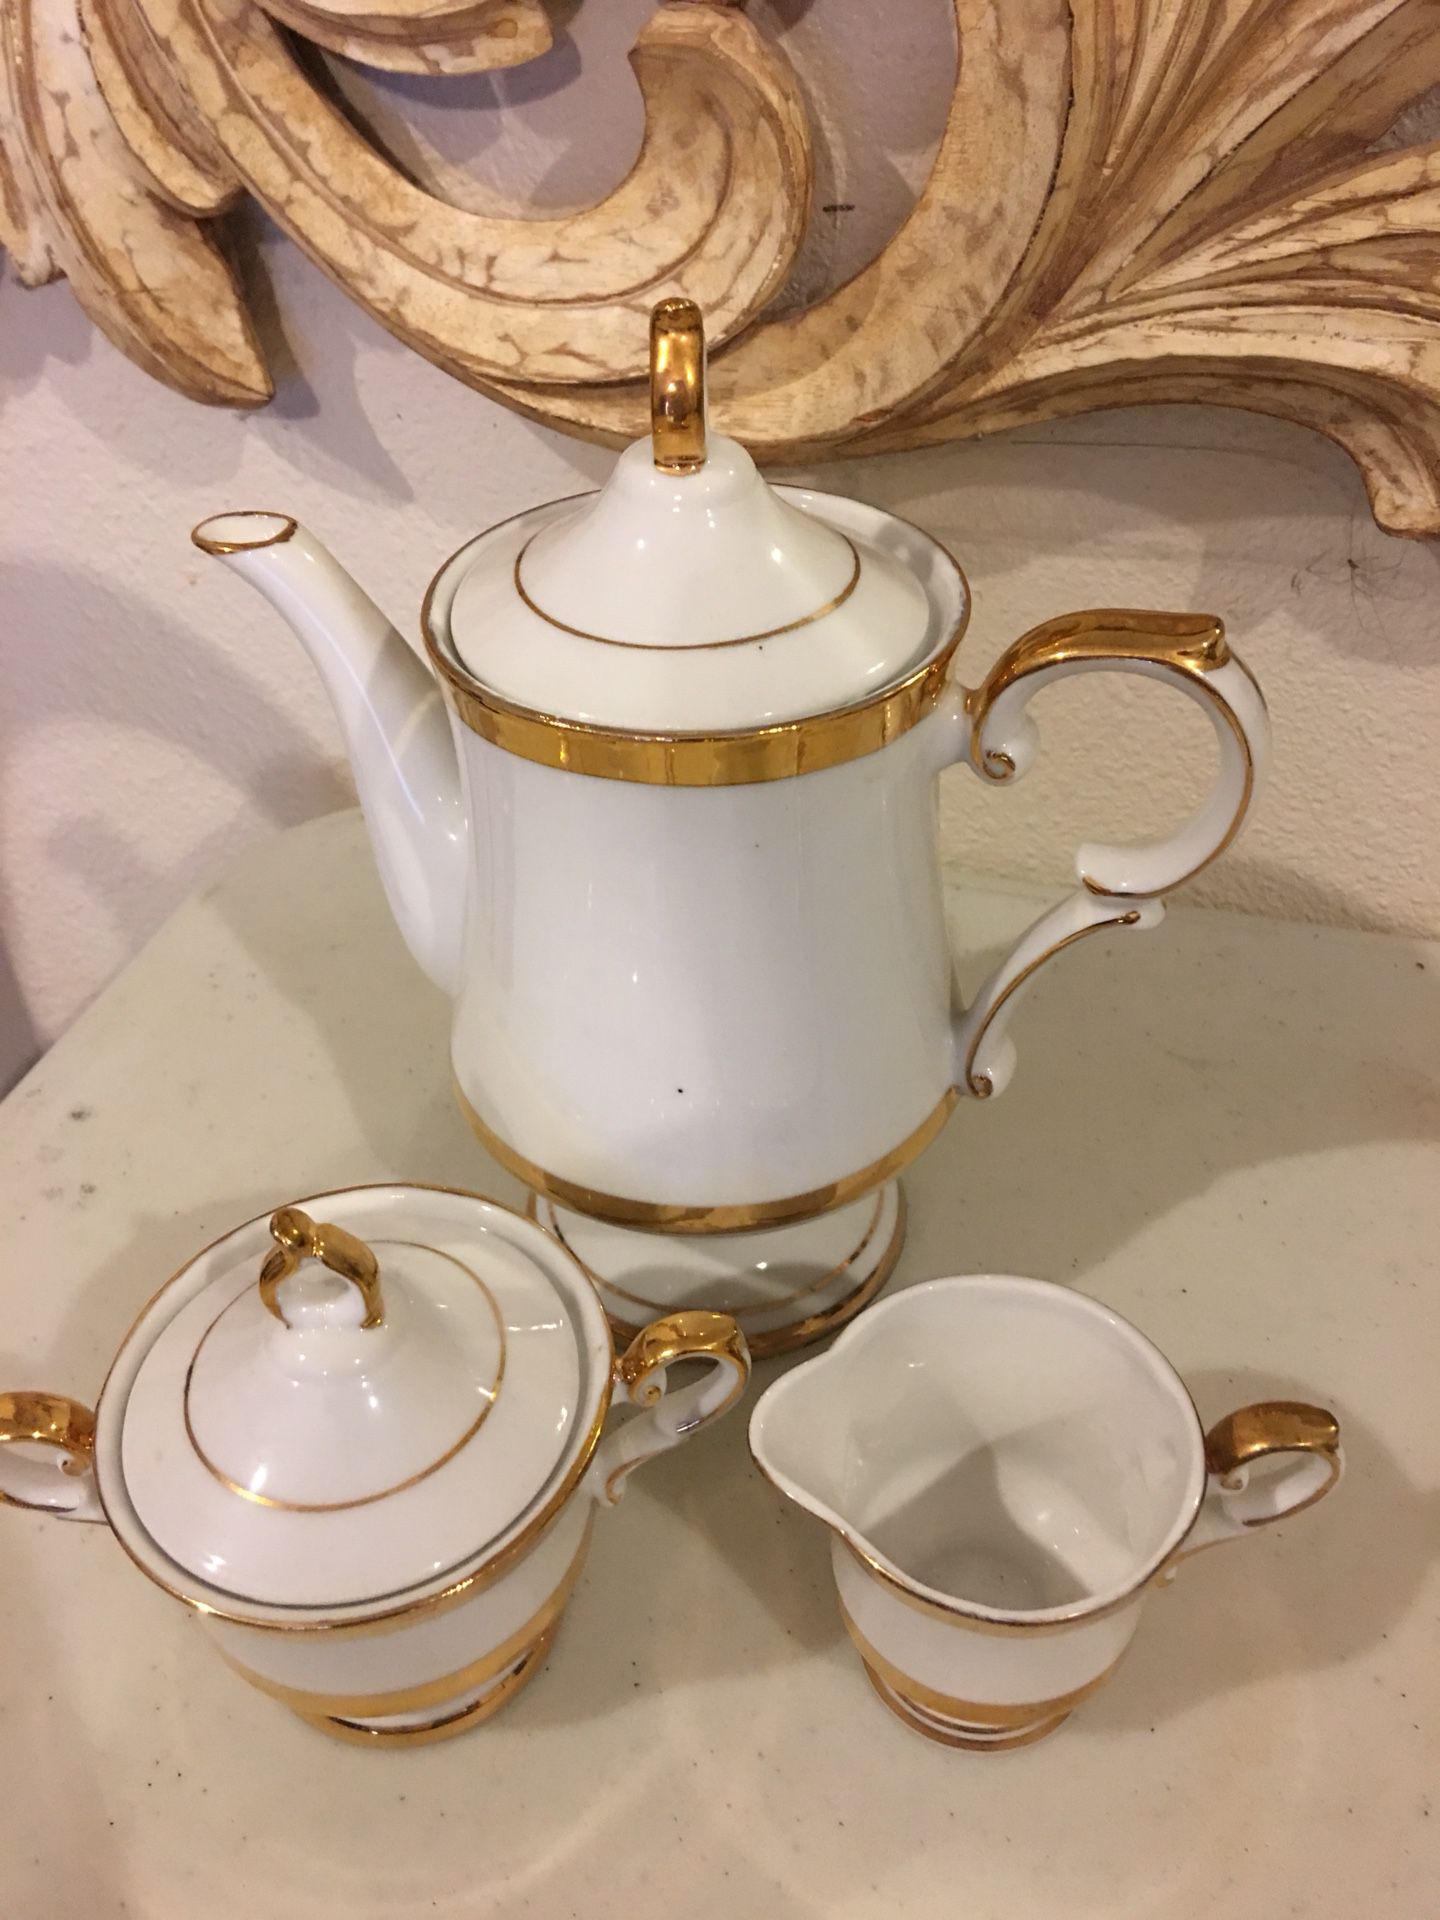 Tiffany style Tea set